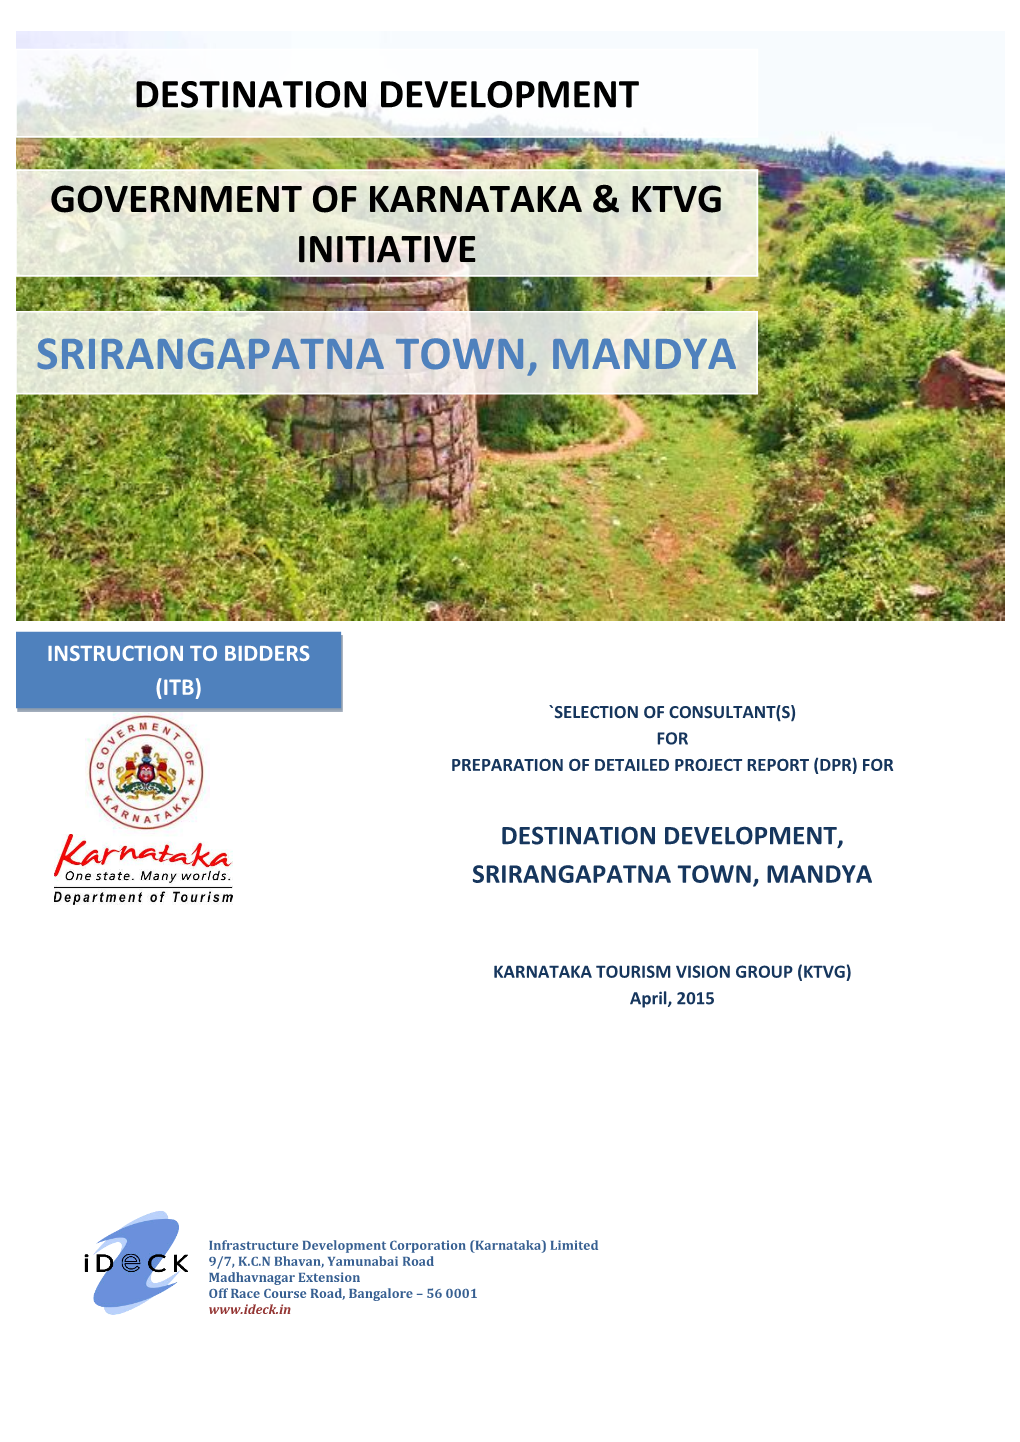 Destination Development Srirangapatnadestination Town, Mandya Development Government of Karnataka & Ktvg Initiative1